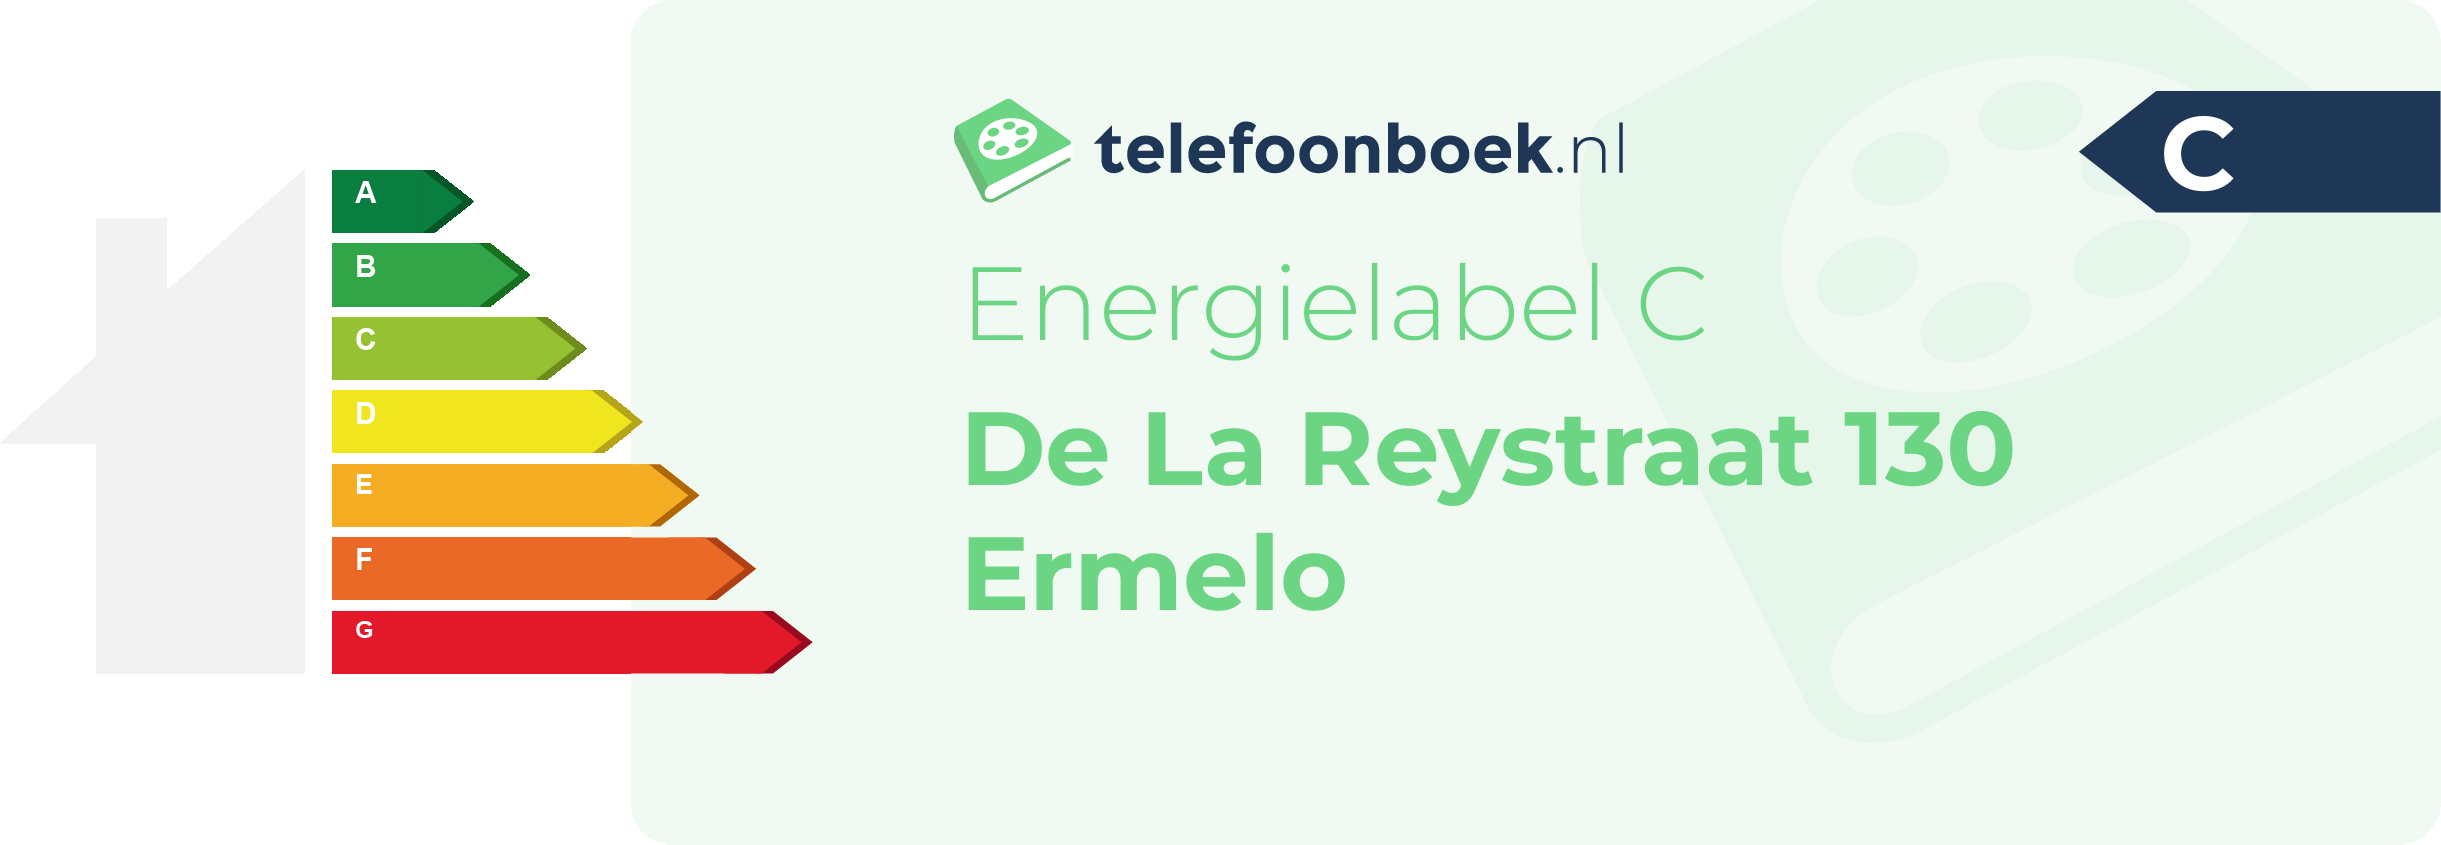 Energielabel De La Reystraat 130 Ermelo